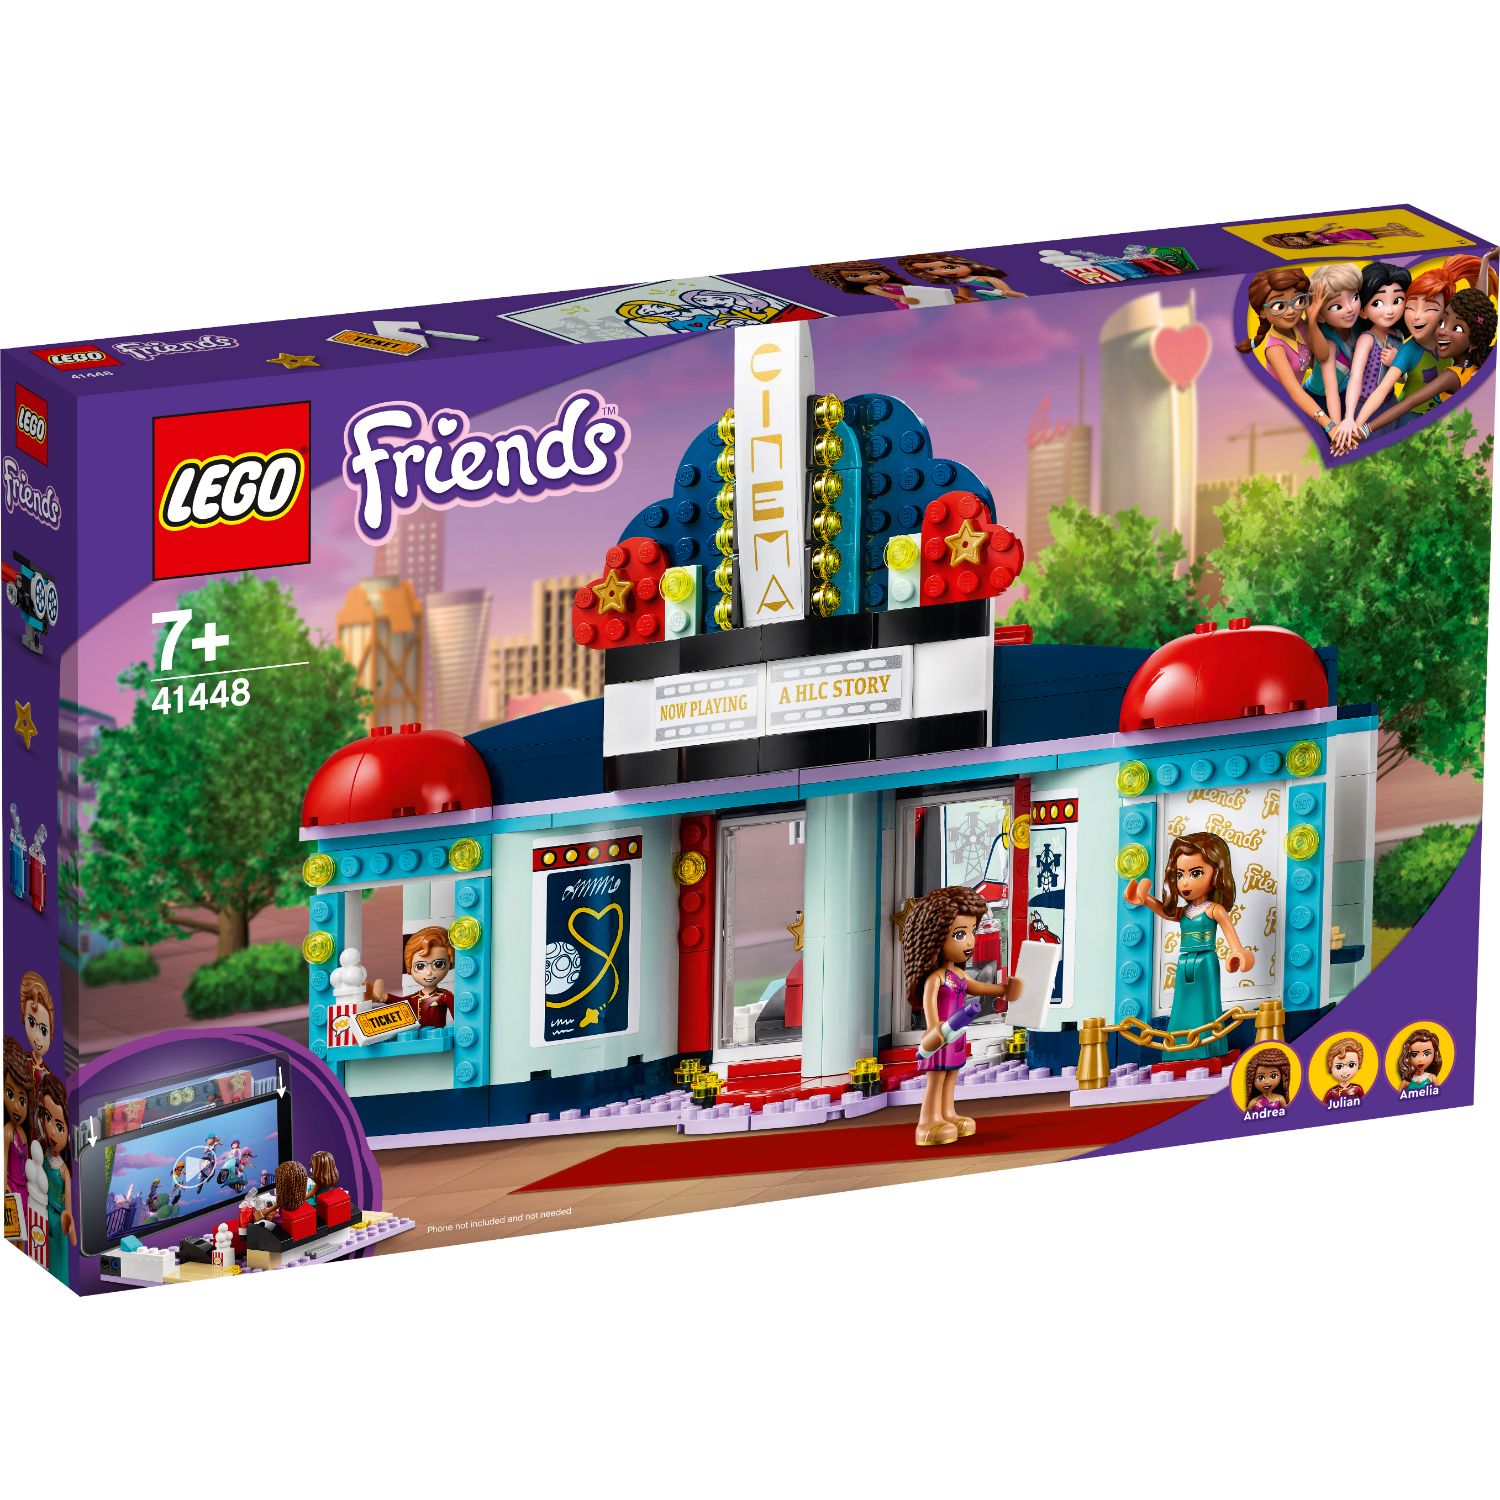 Lego Friends 41448 Heartlake City Bioscoop